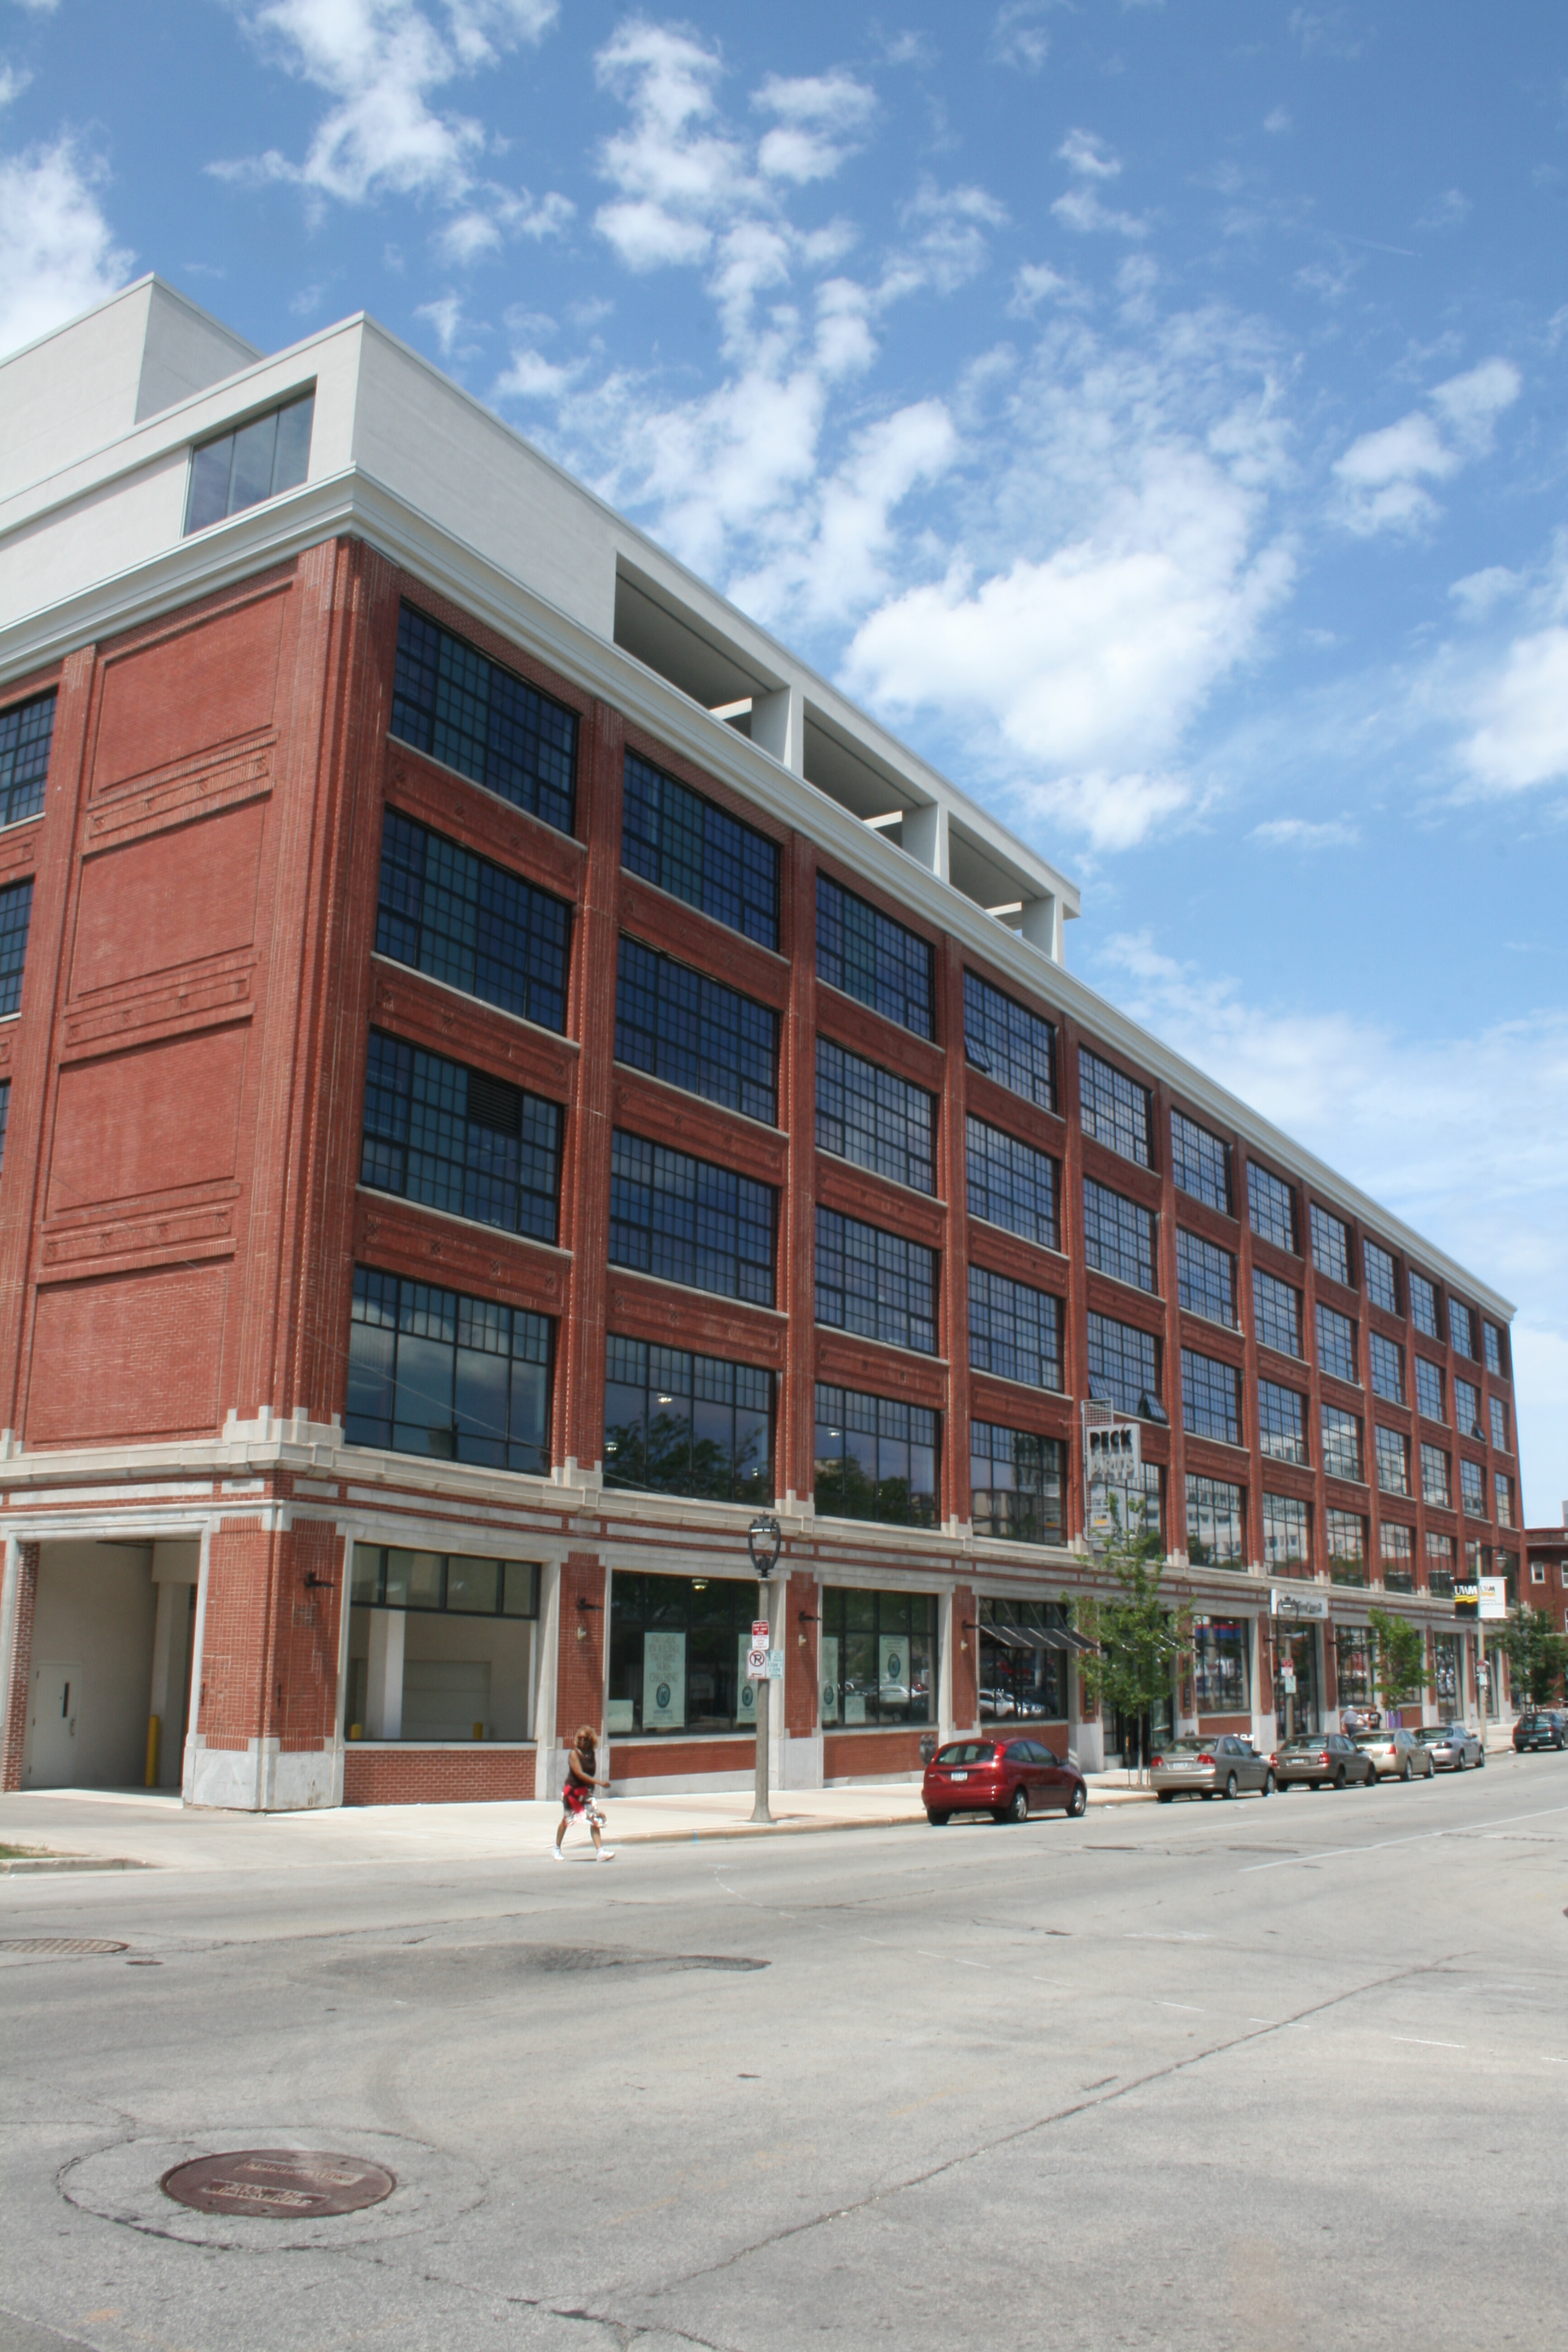 ... Development (The Future of Urban Shopping Centers?) - Urban Milwaukee